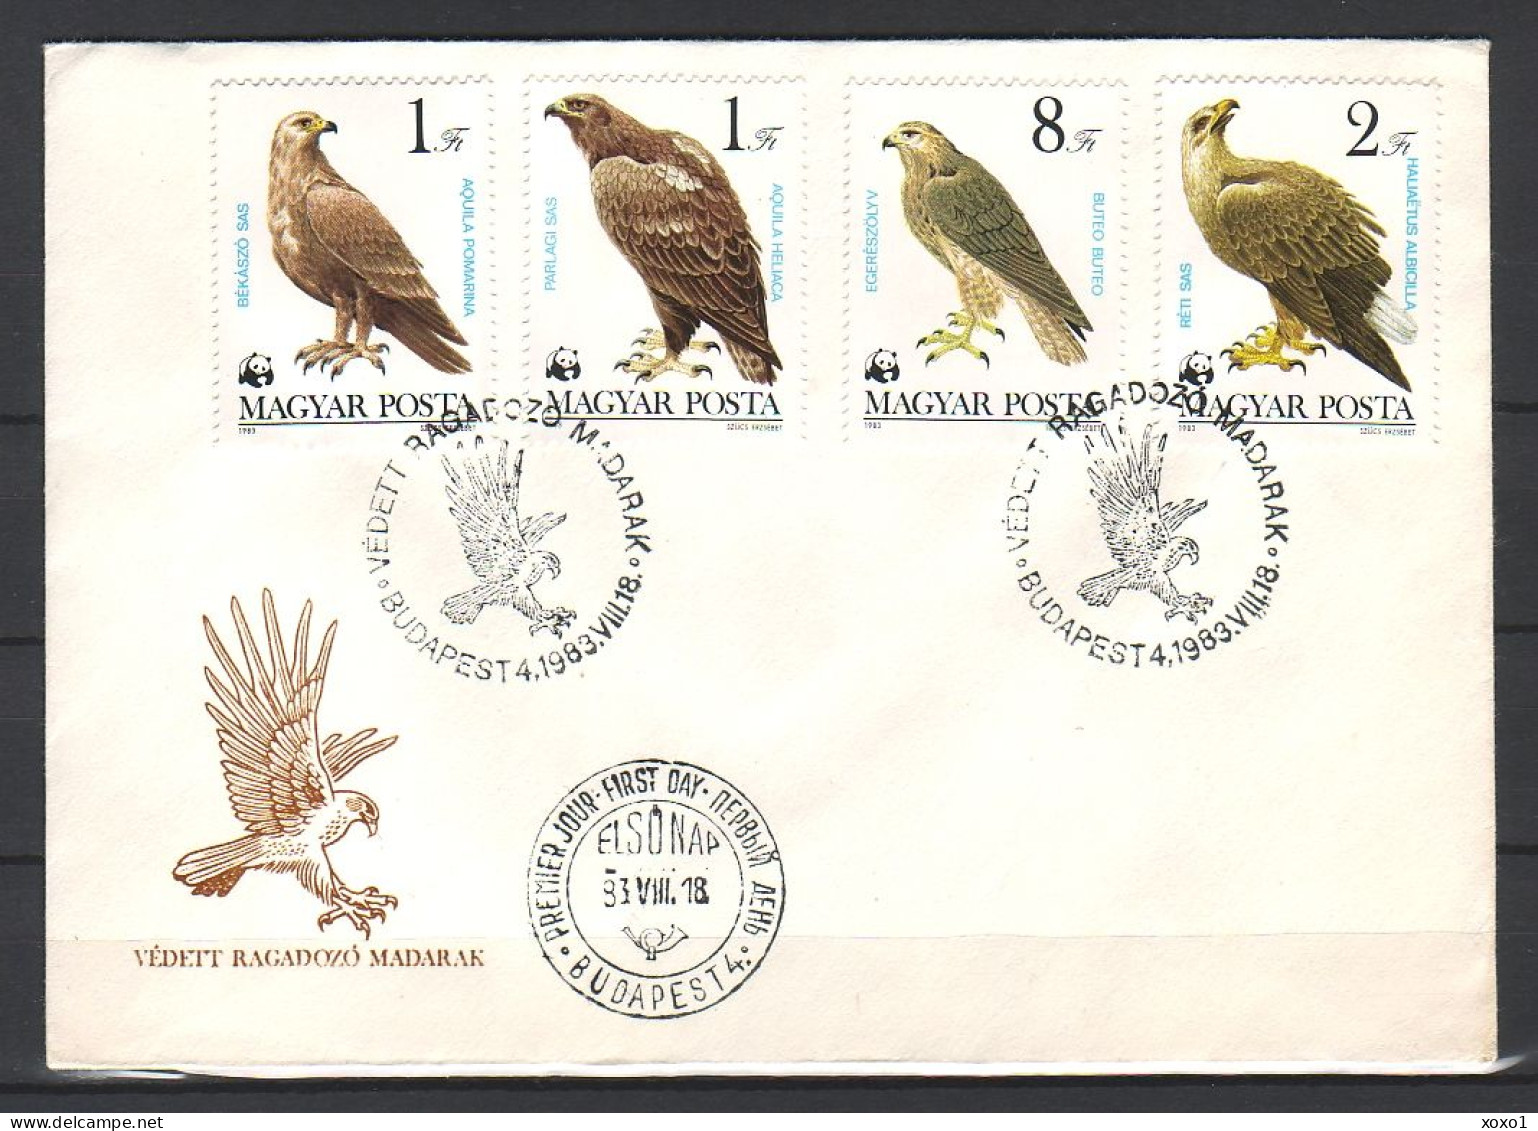 Hungary 1983 MiNr. 3624 - 3630 Ungarn WWF Greifvögel Eagles Birds Of Prey  2 LOCAL FDC 12,00 € - FDC